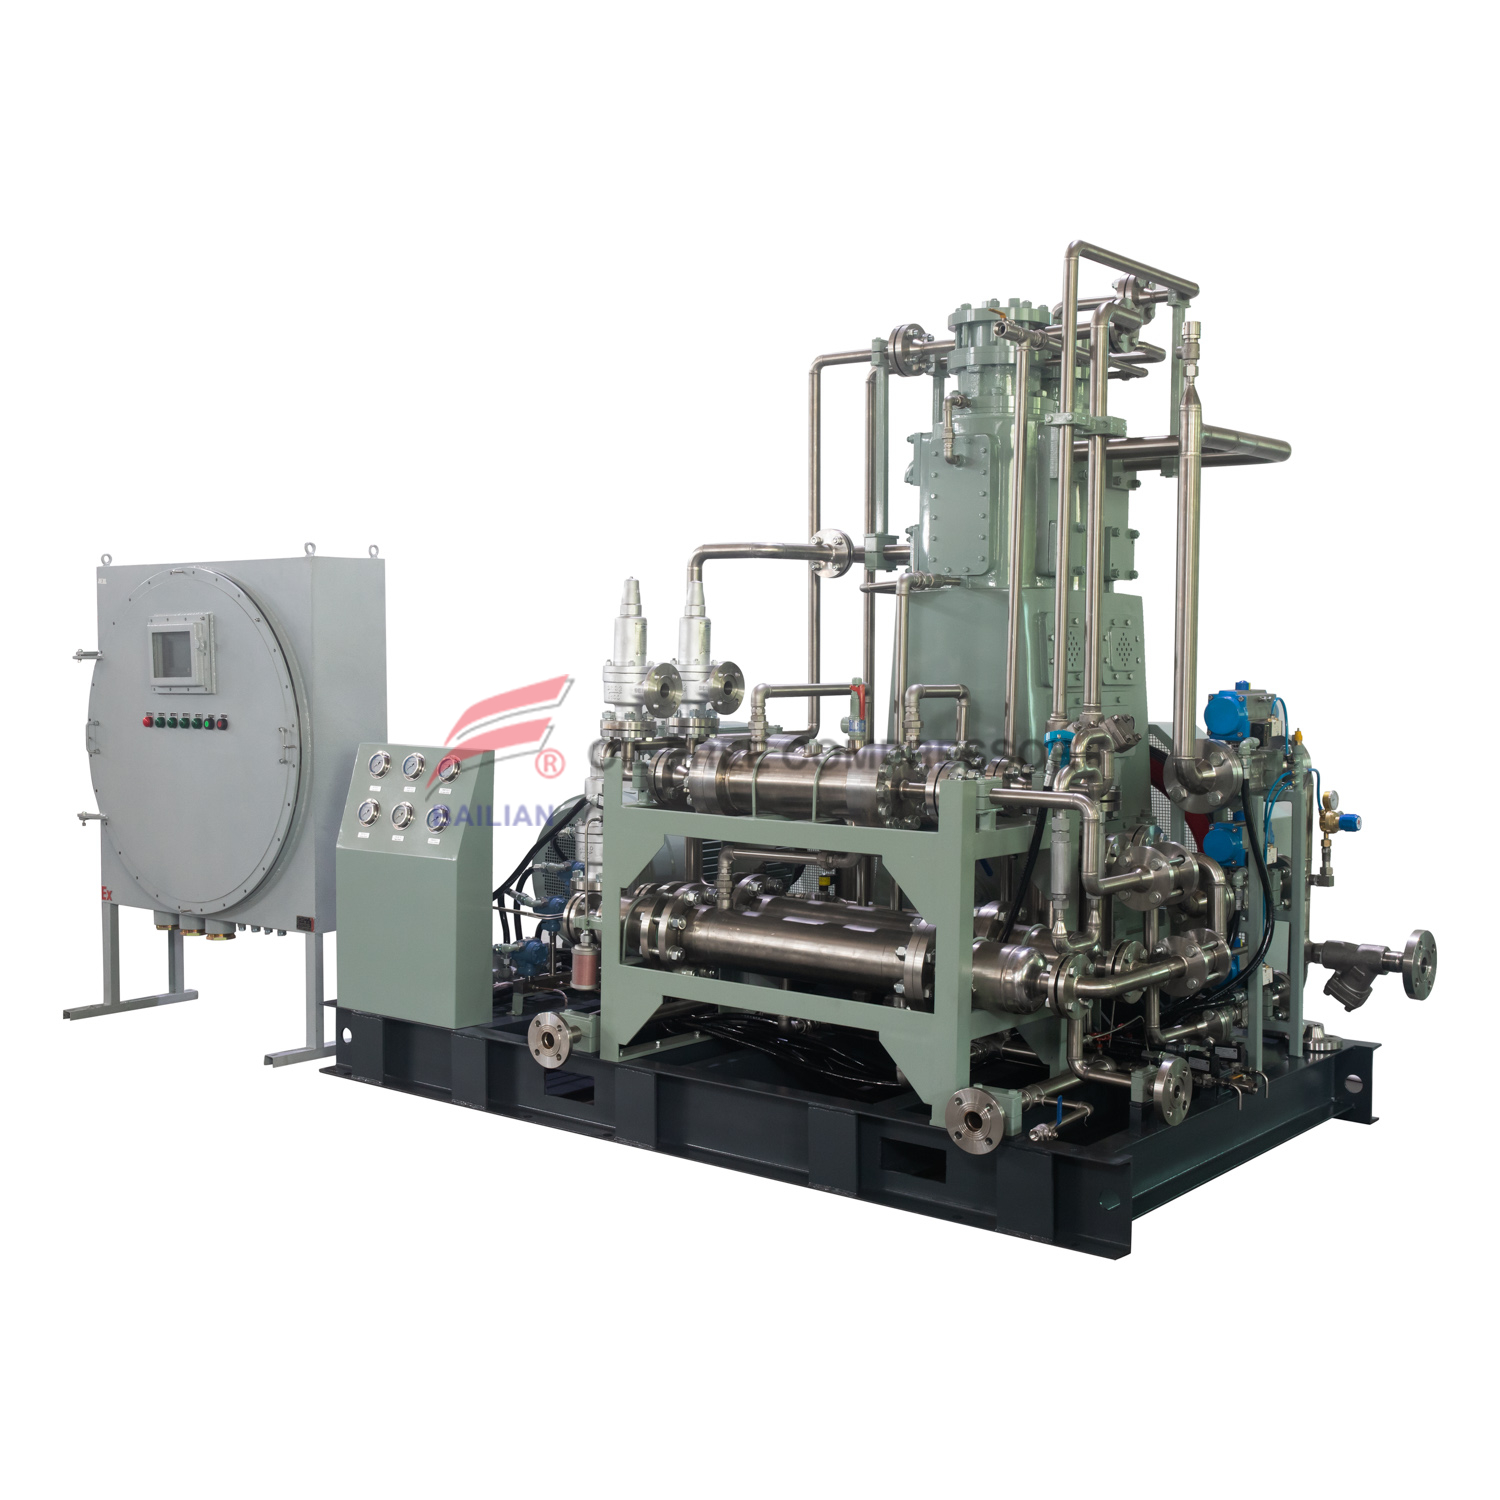  GZW-36/7-250 Fully oil-free vertical lubrication N2 Compressor